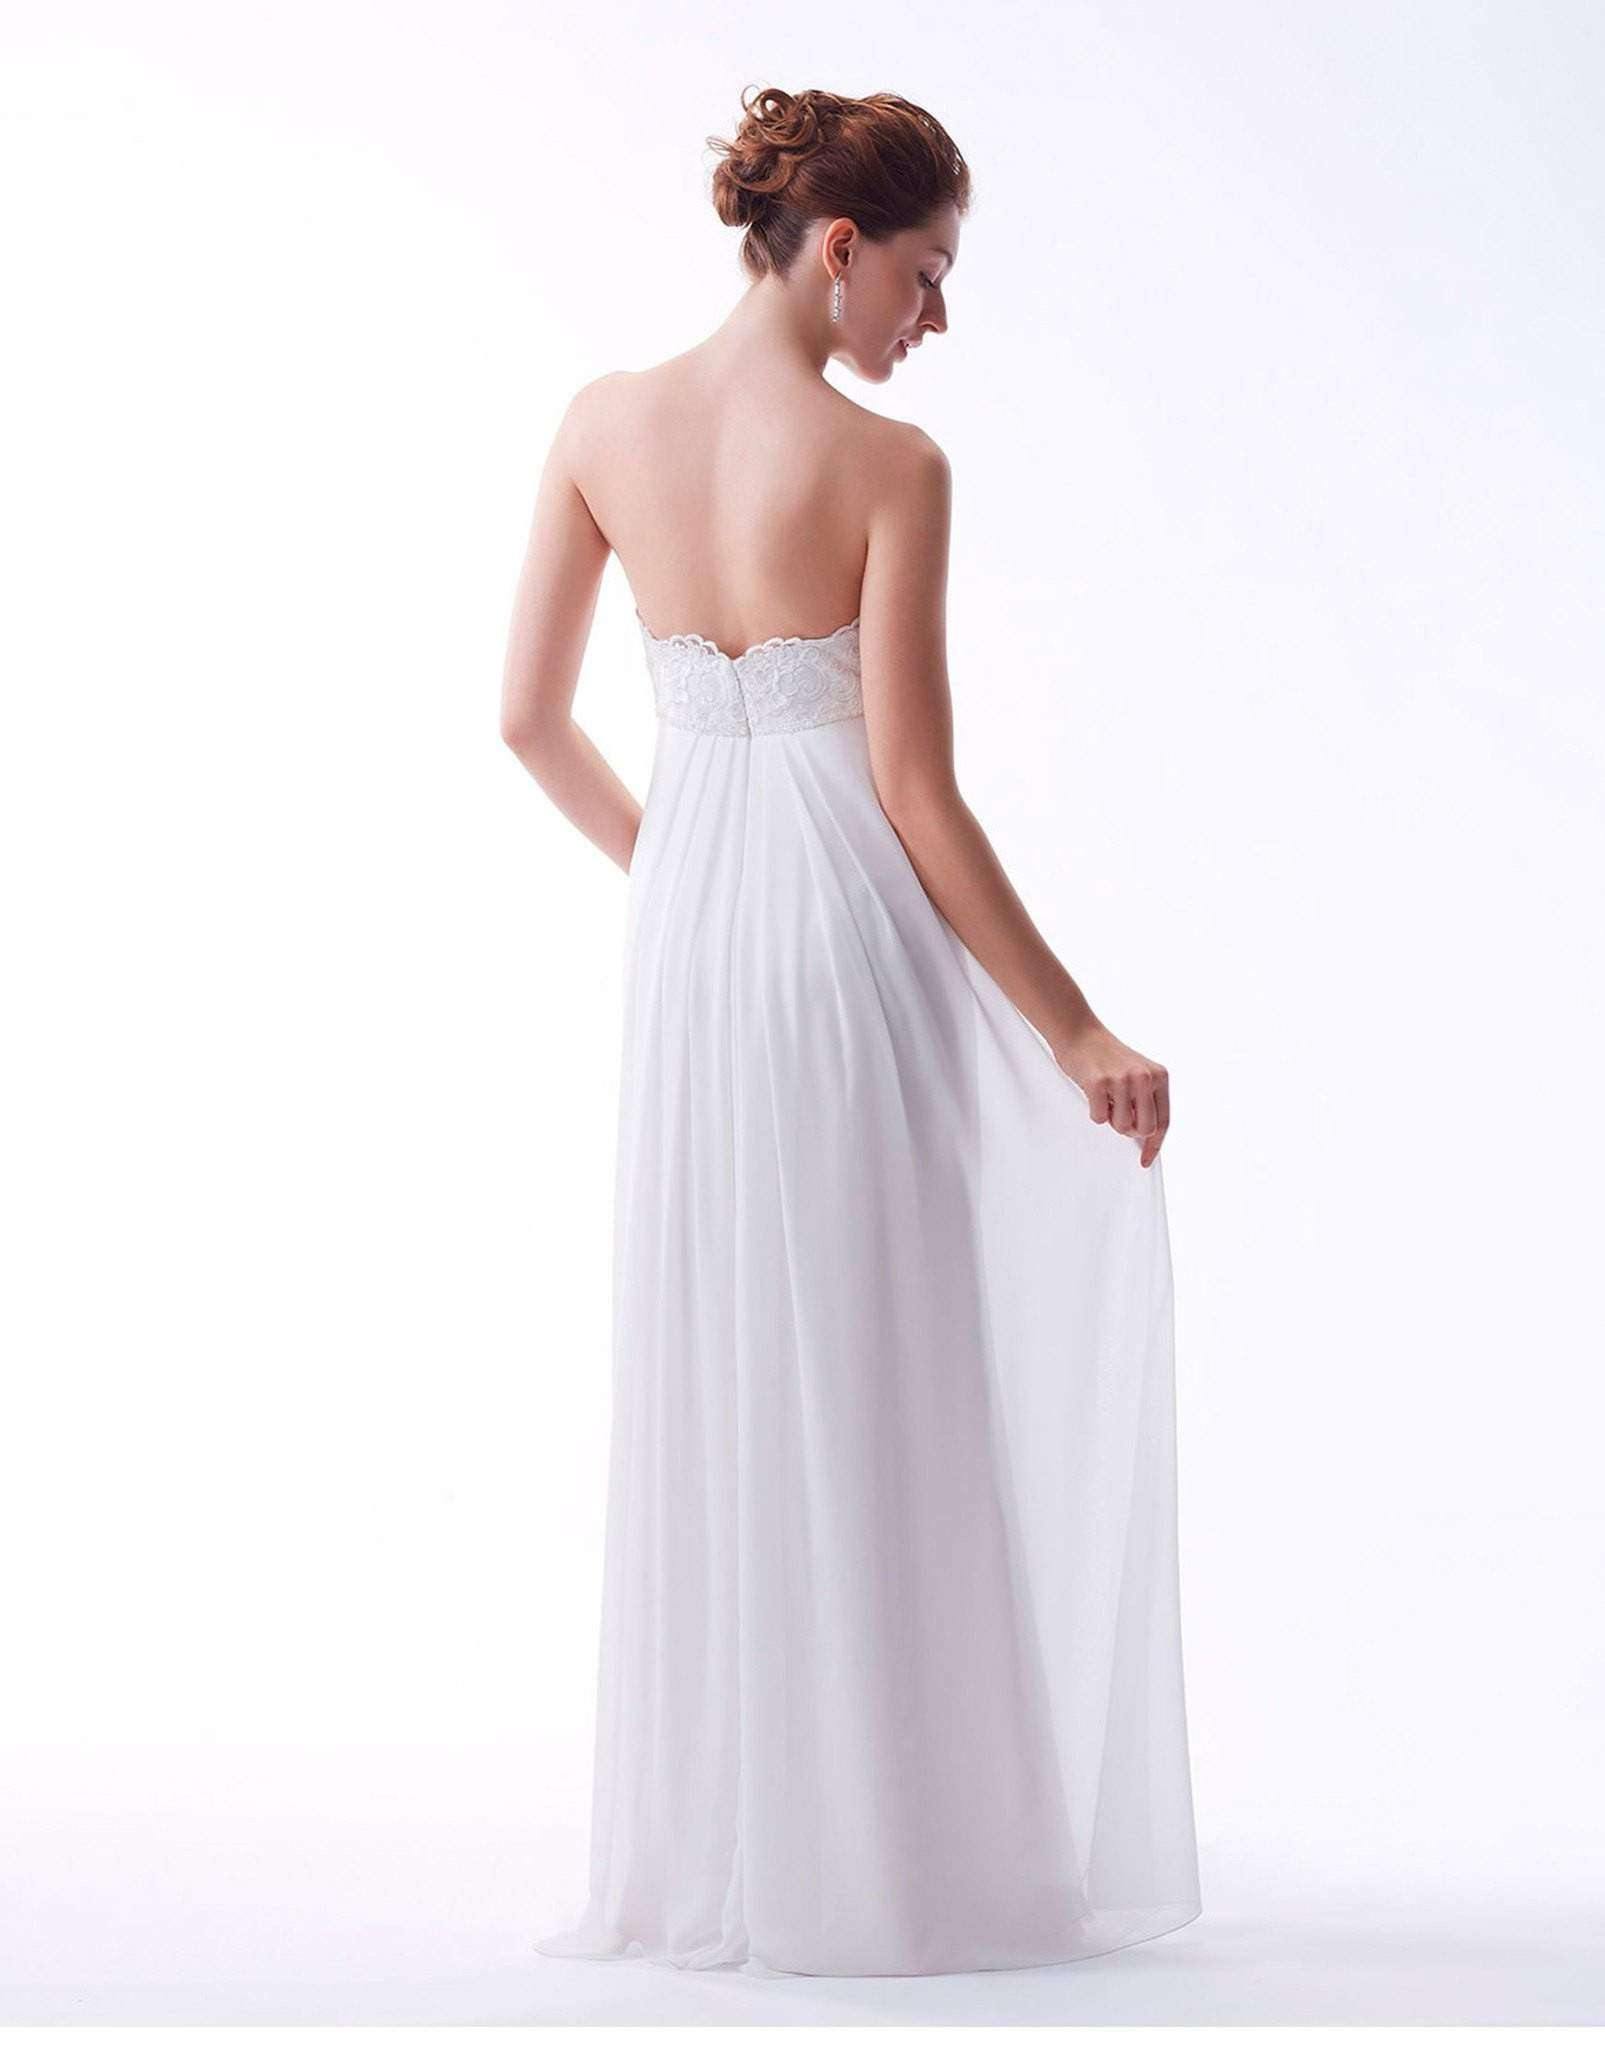 UK20 - VENUS - Jayne - sale - Adore Bridal and Occasion Wear